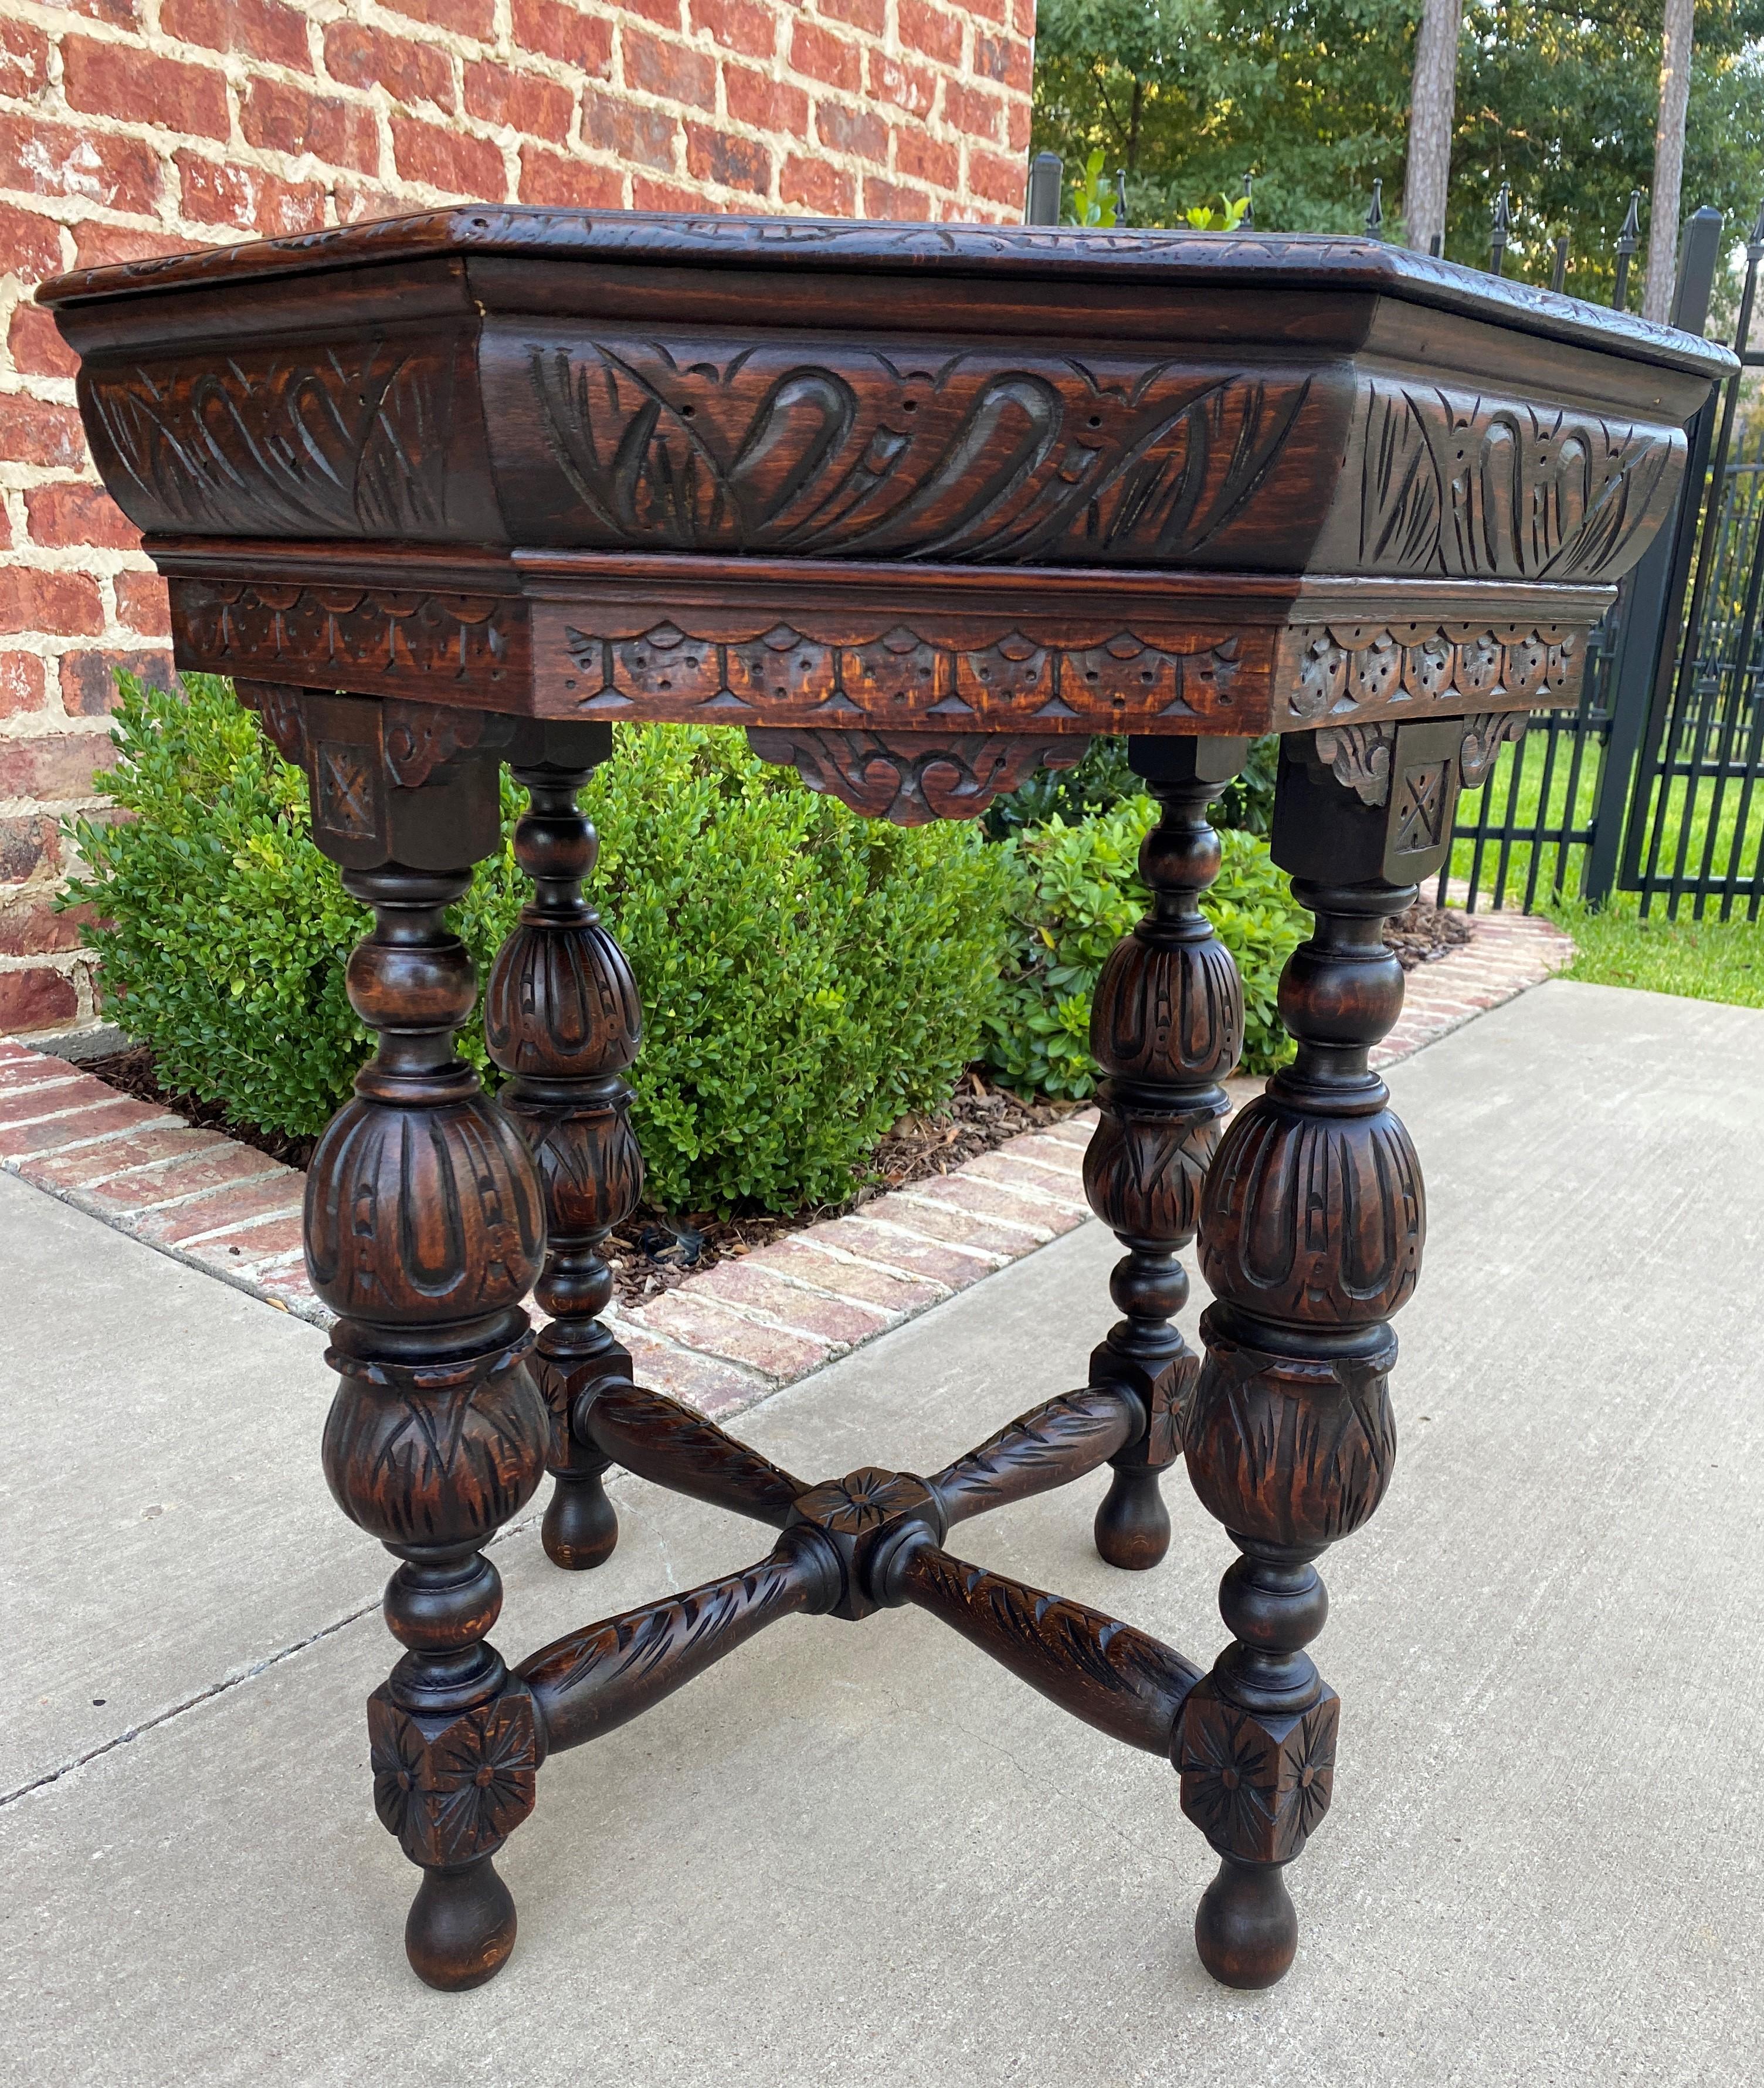 Antique French Table Octagonal Renaissance Revival Carved Oak 19th C 2